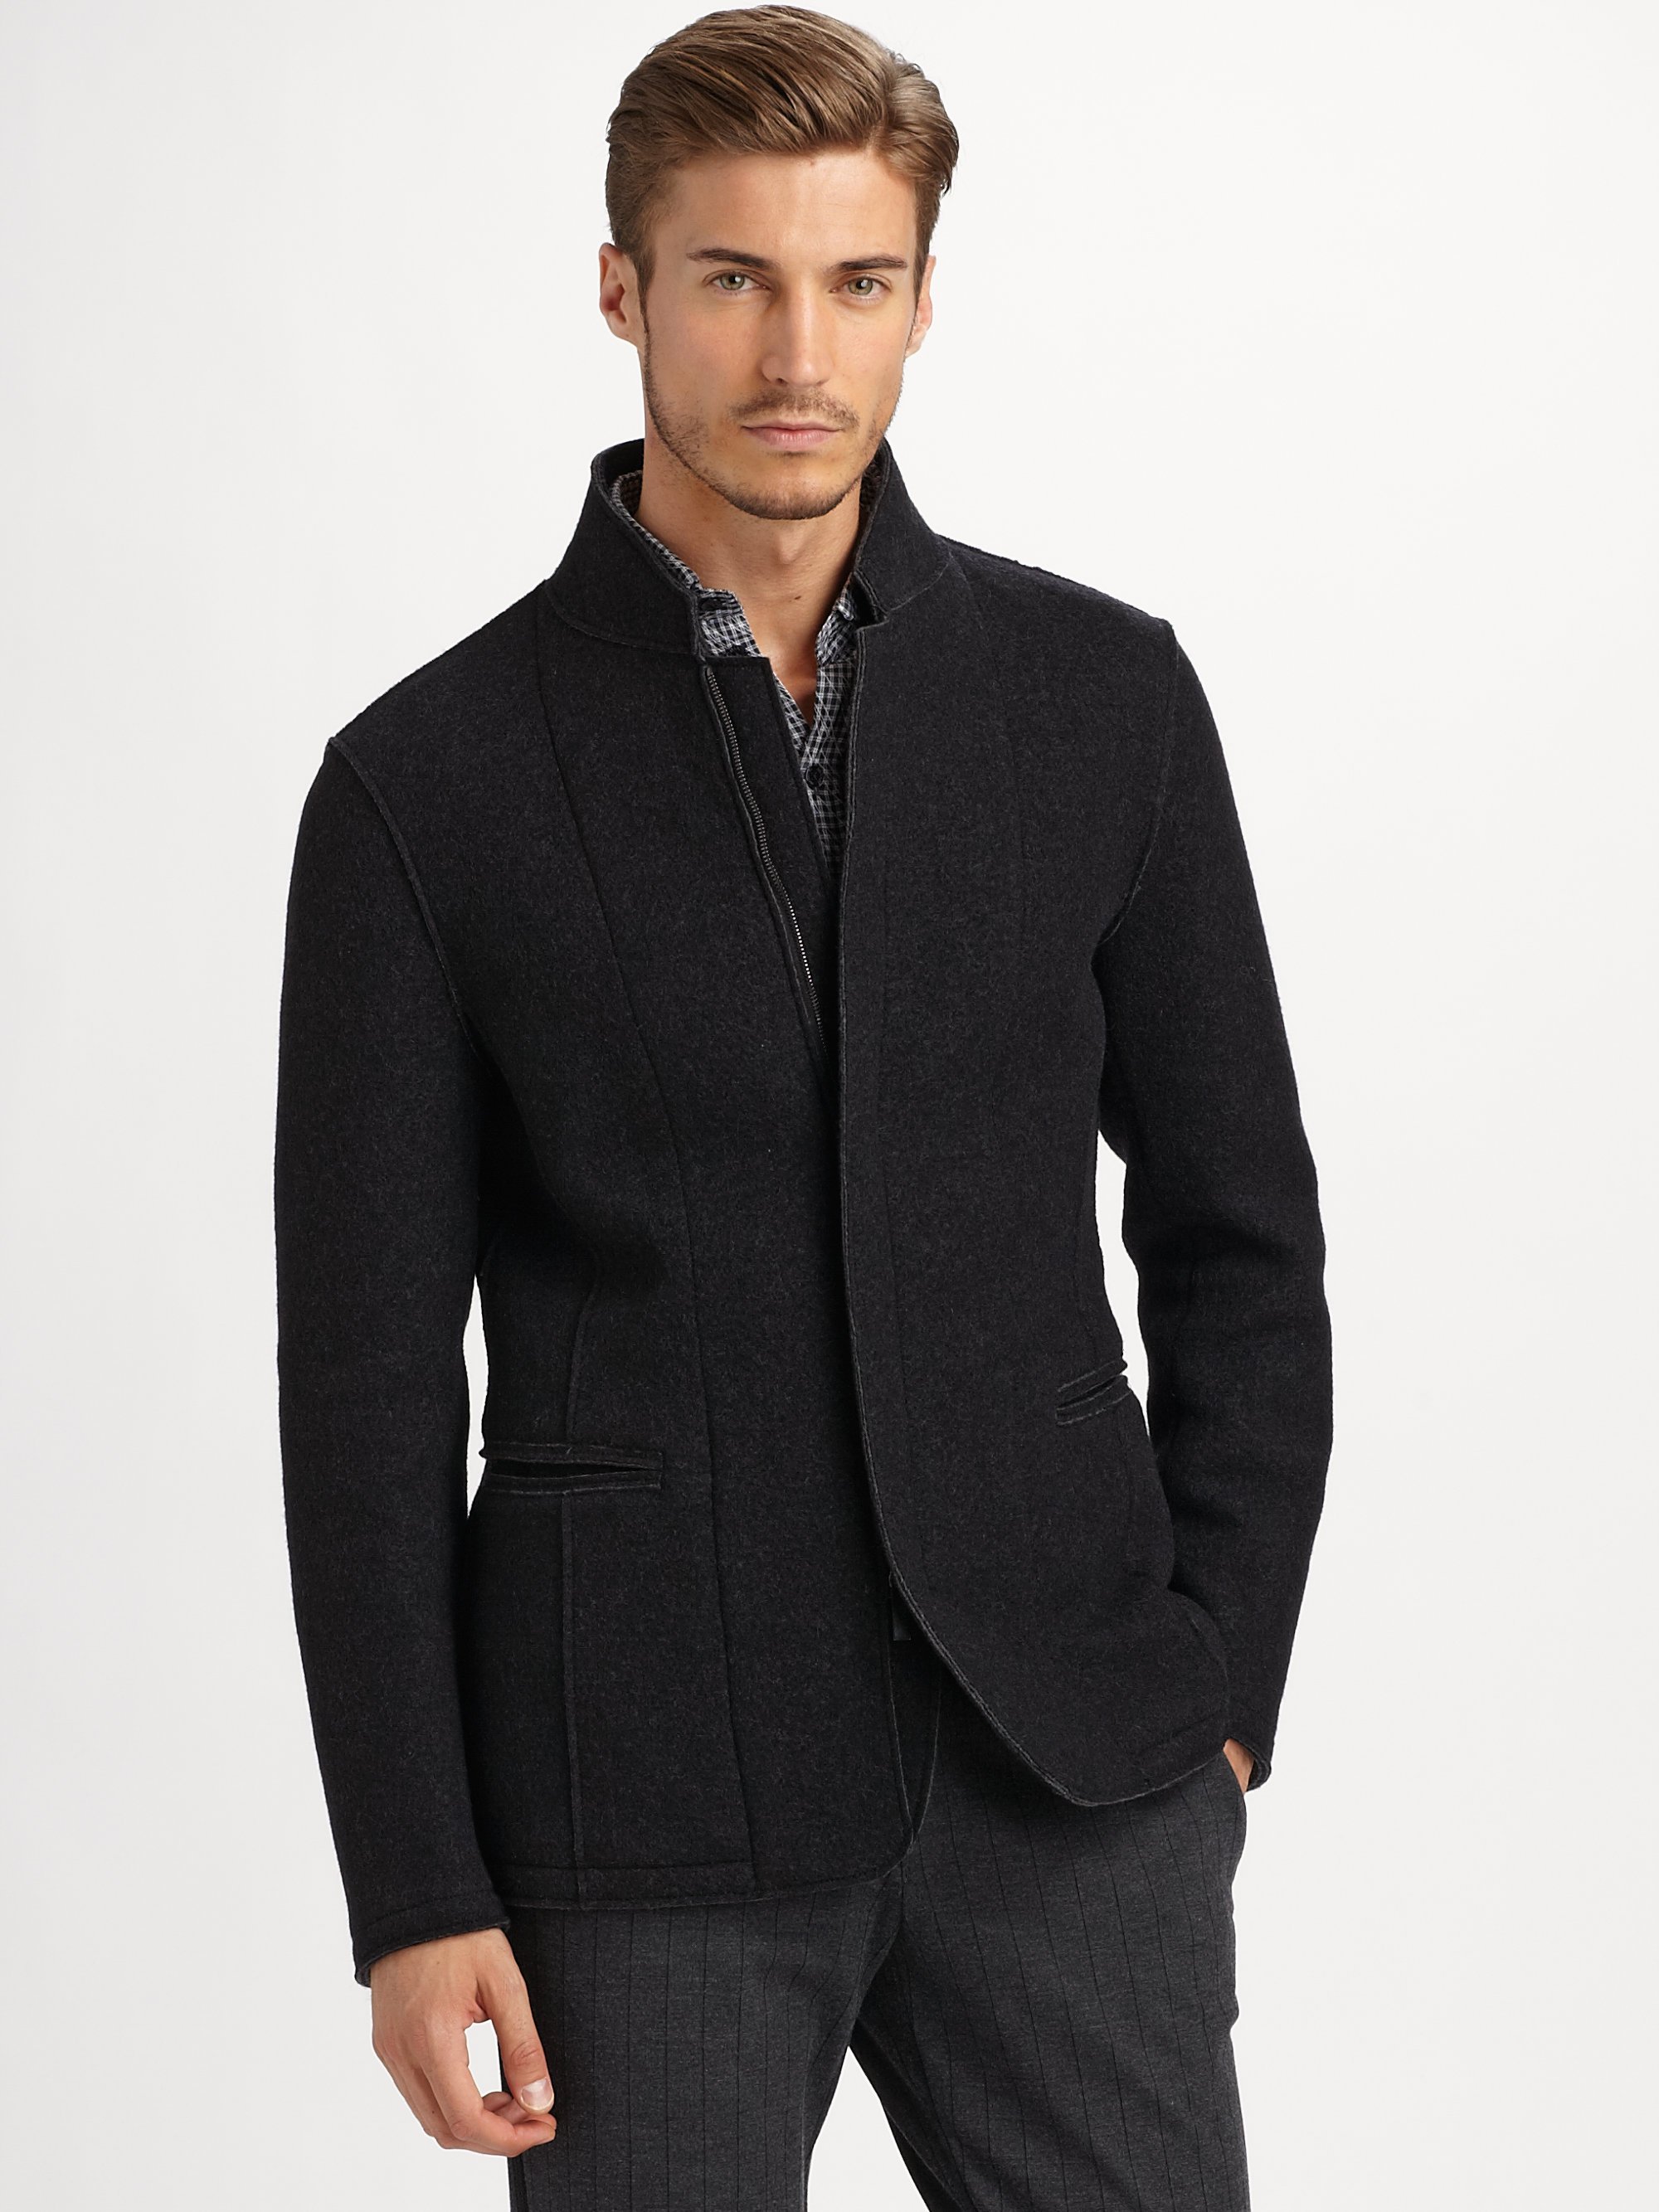 Lyst - Armani Boiled Wool Blend Jacket in Black for Men